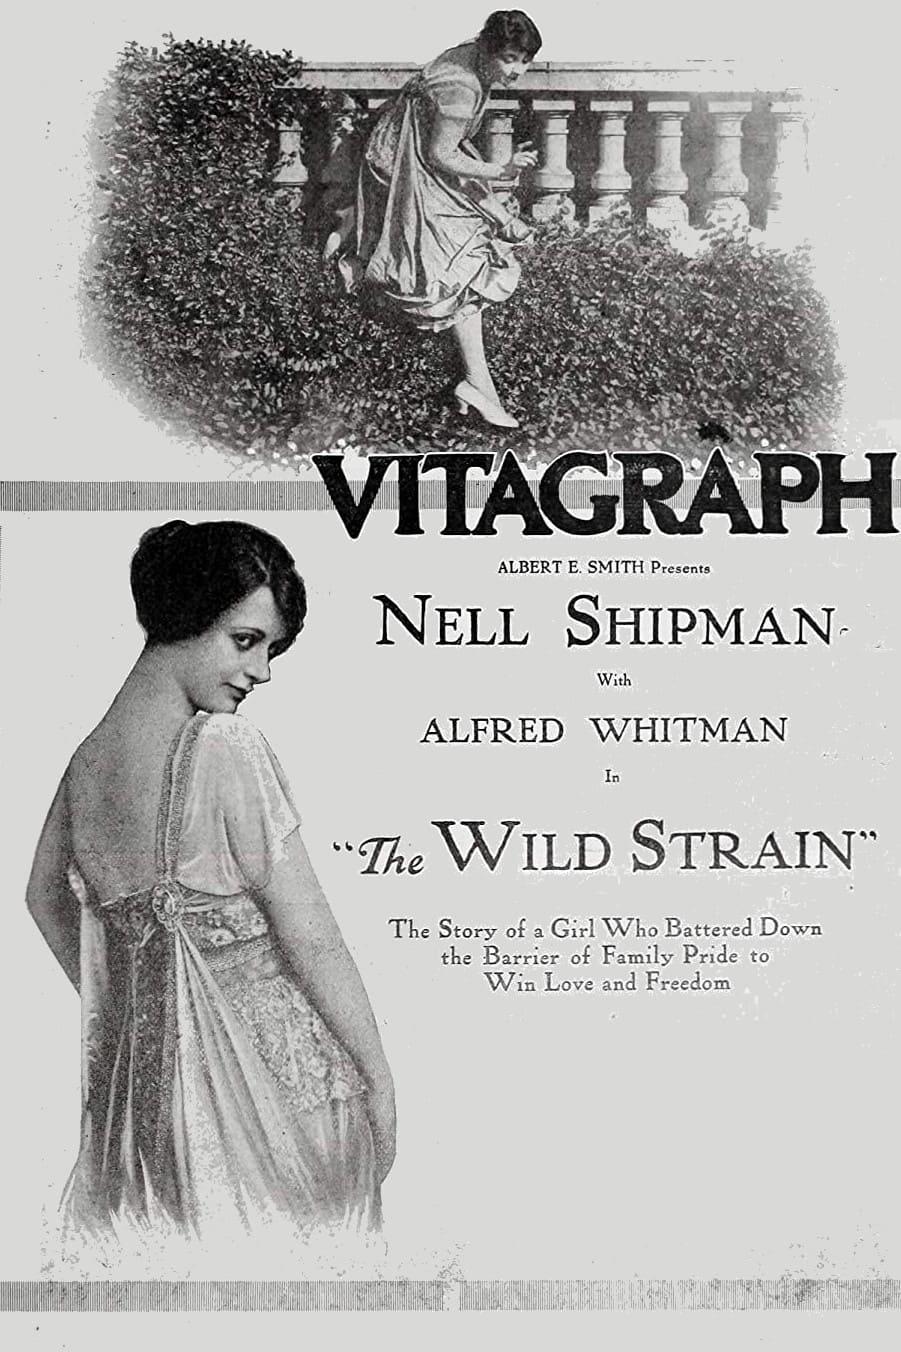 The Wild Strain poster